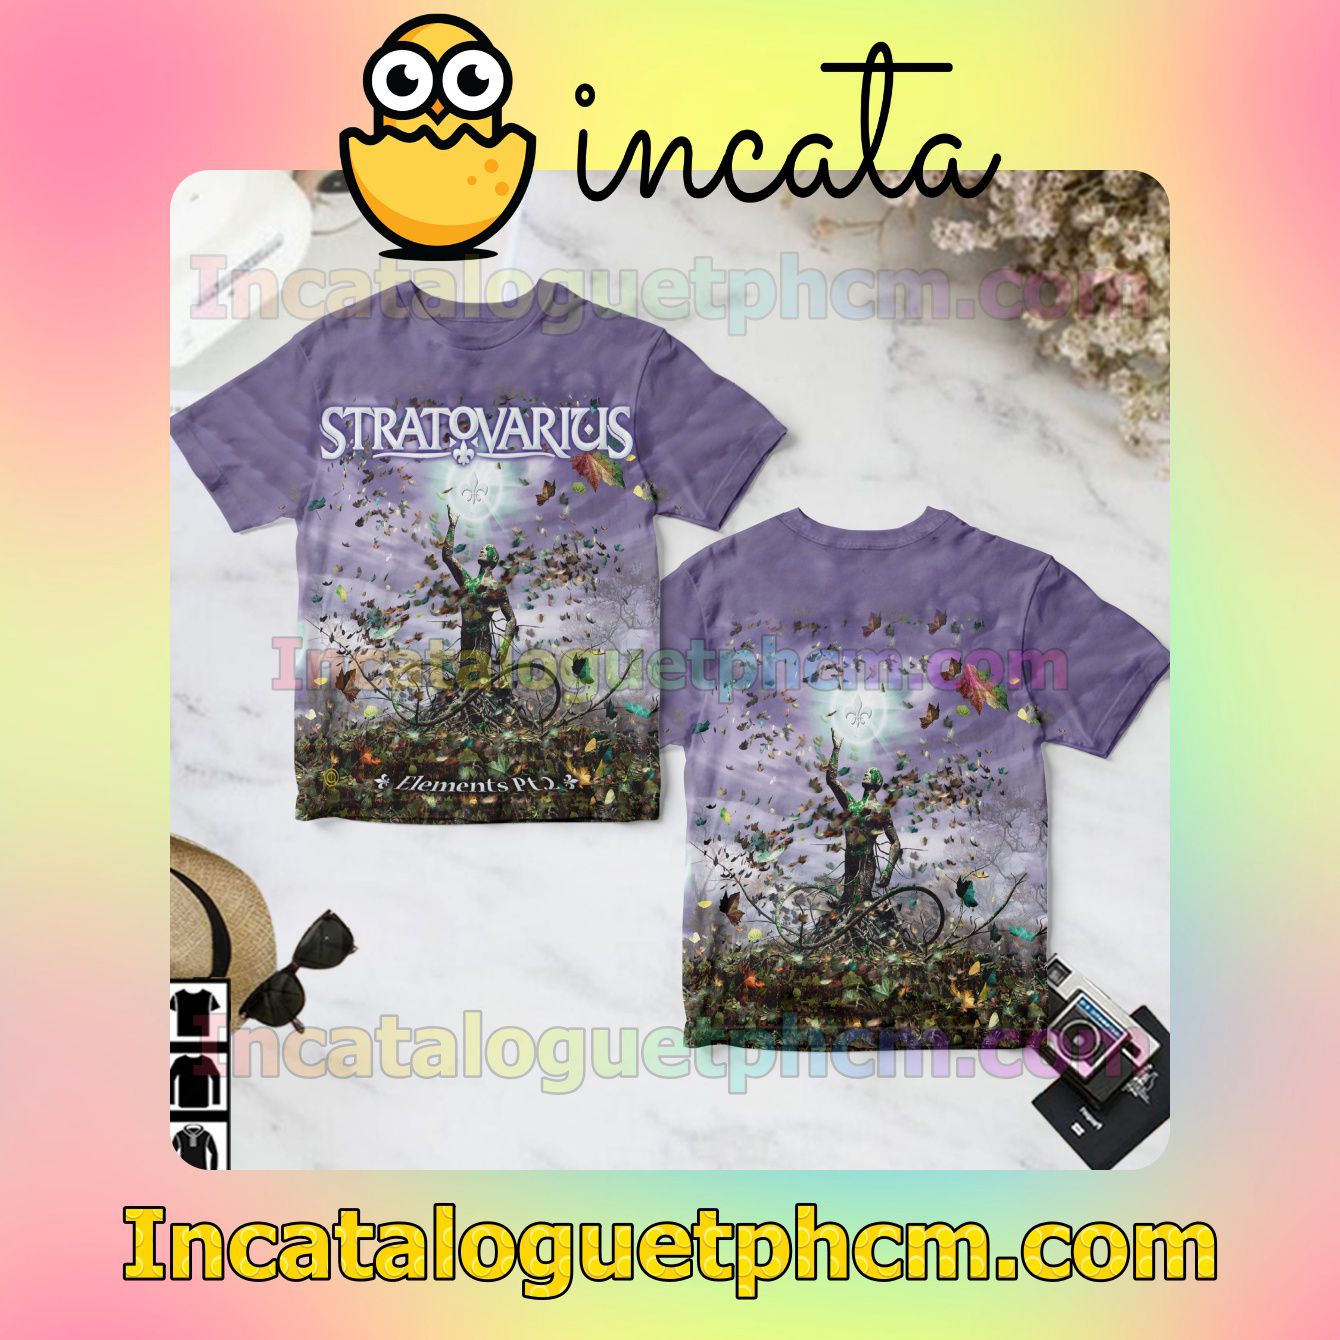 Stratovarius Elements Pt. 2 Album Fan Gift Shirt